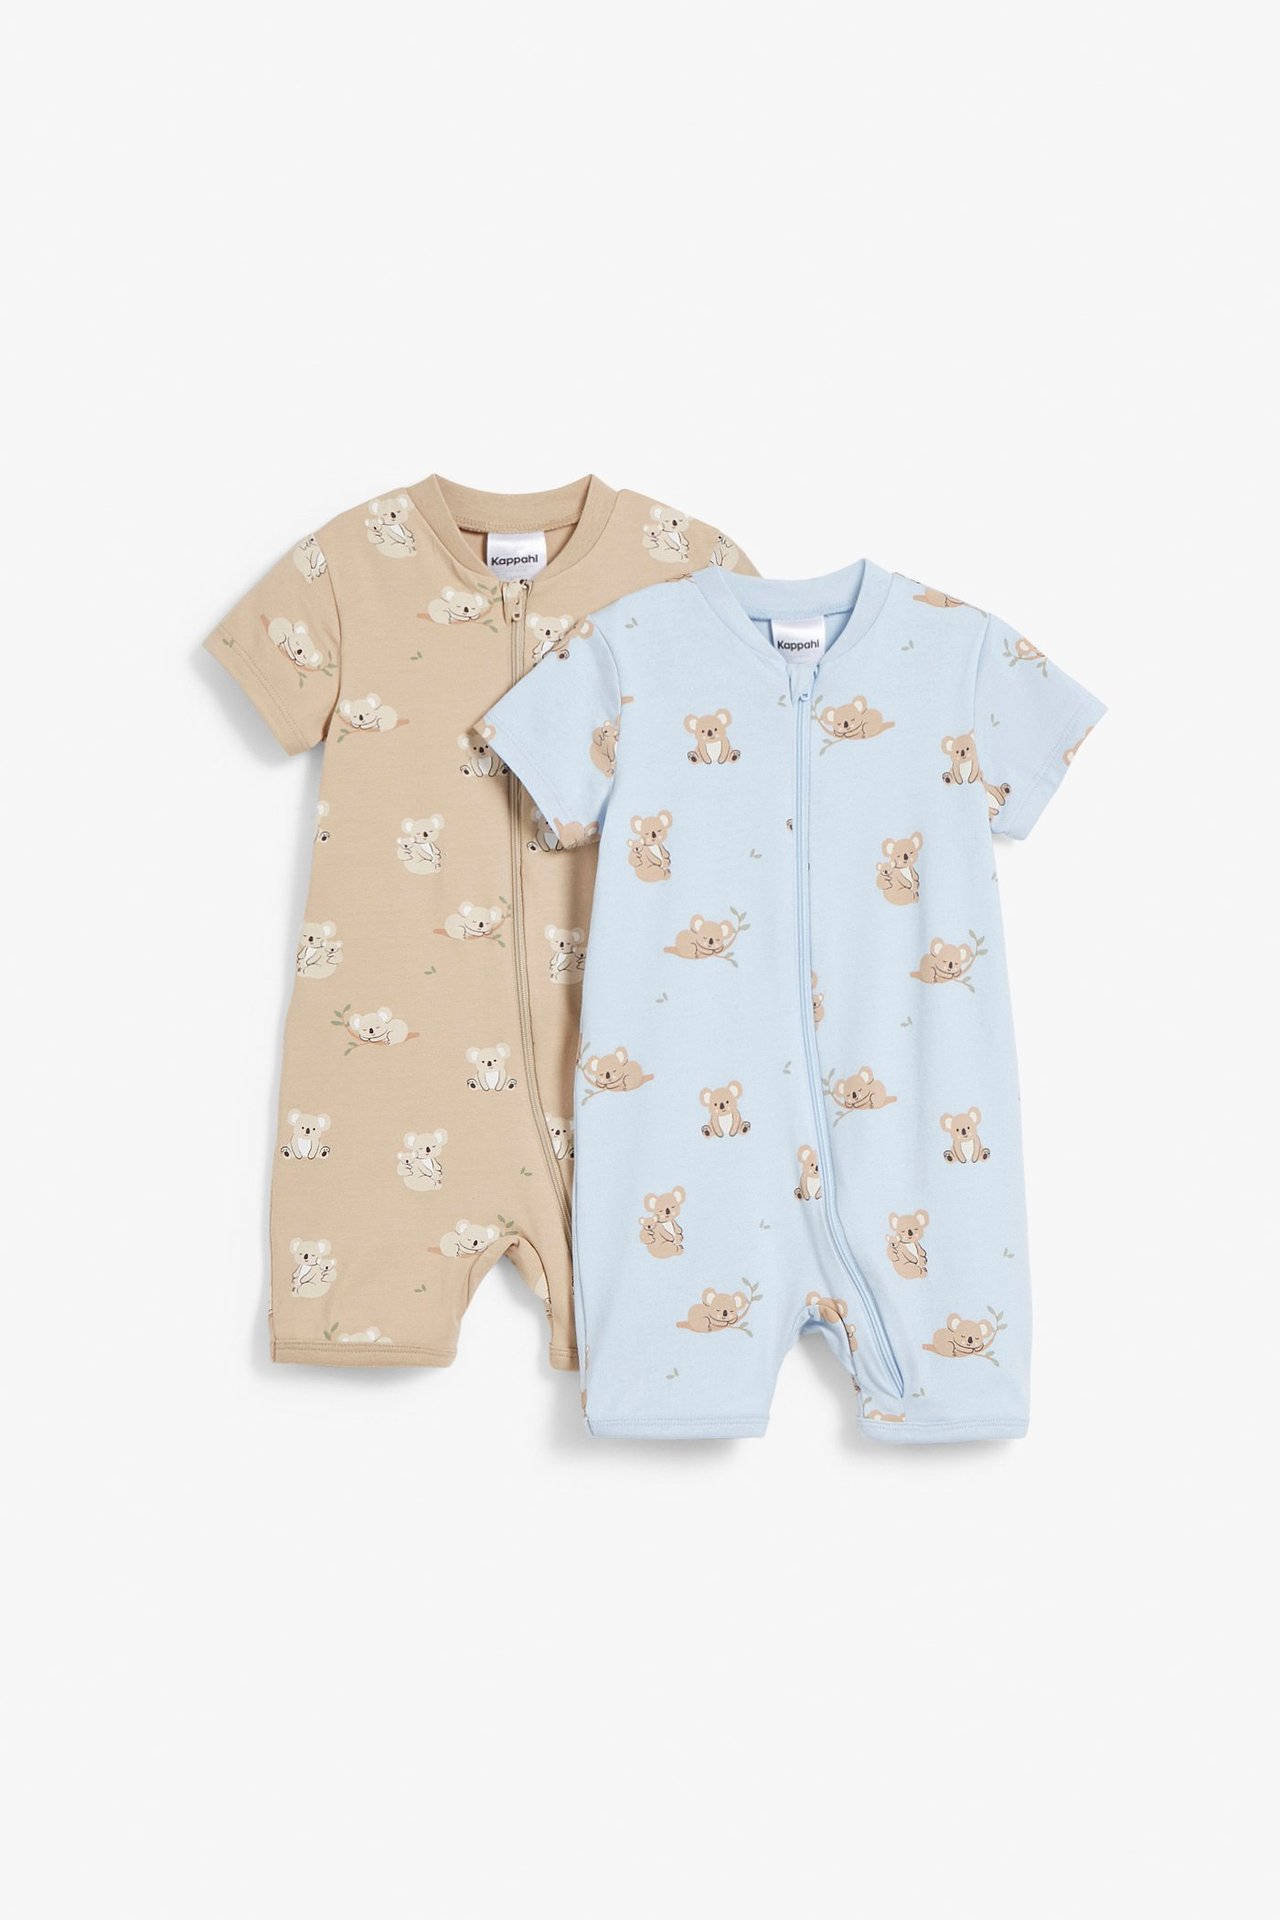 2 kpl:n pakkaus vauvojen pyjamoita